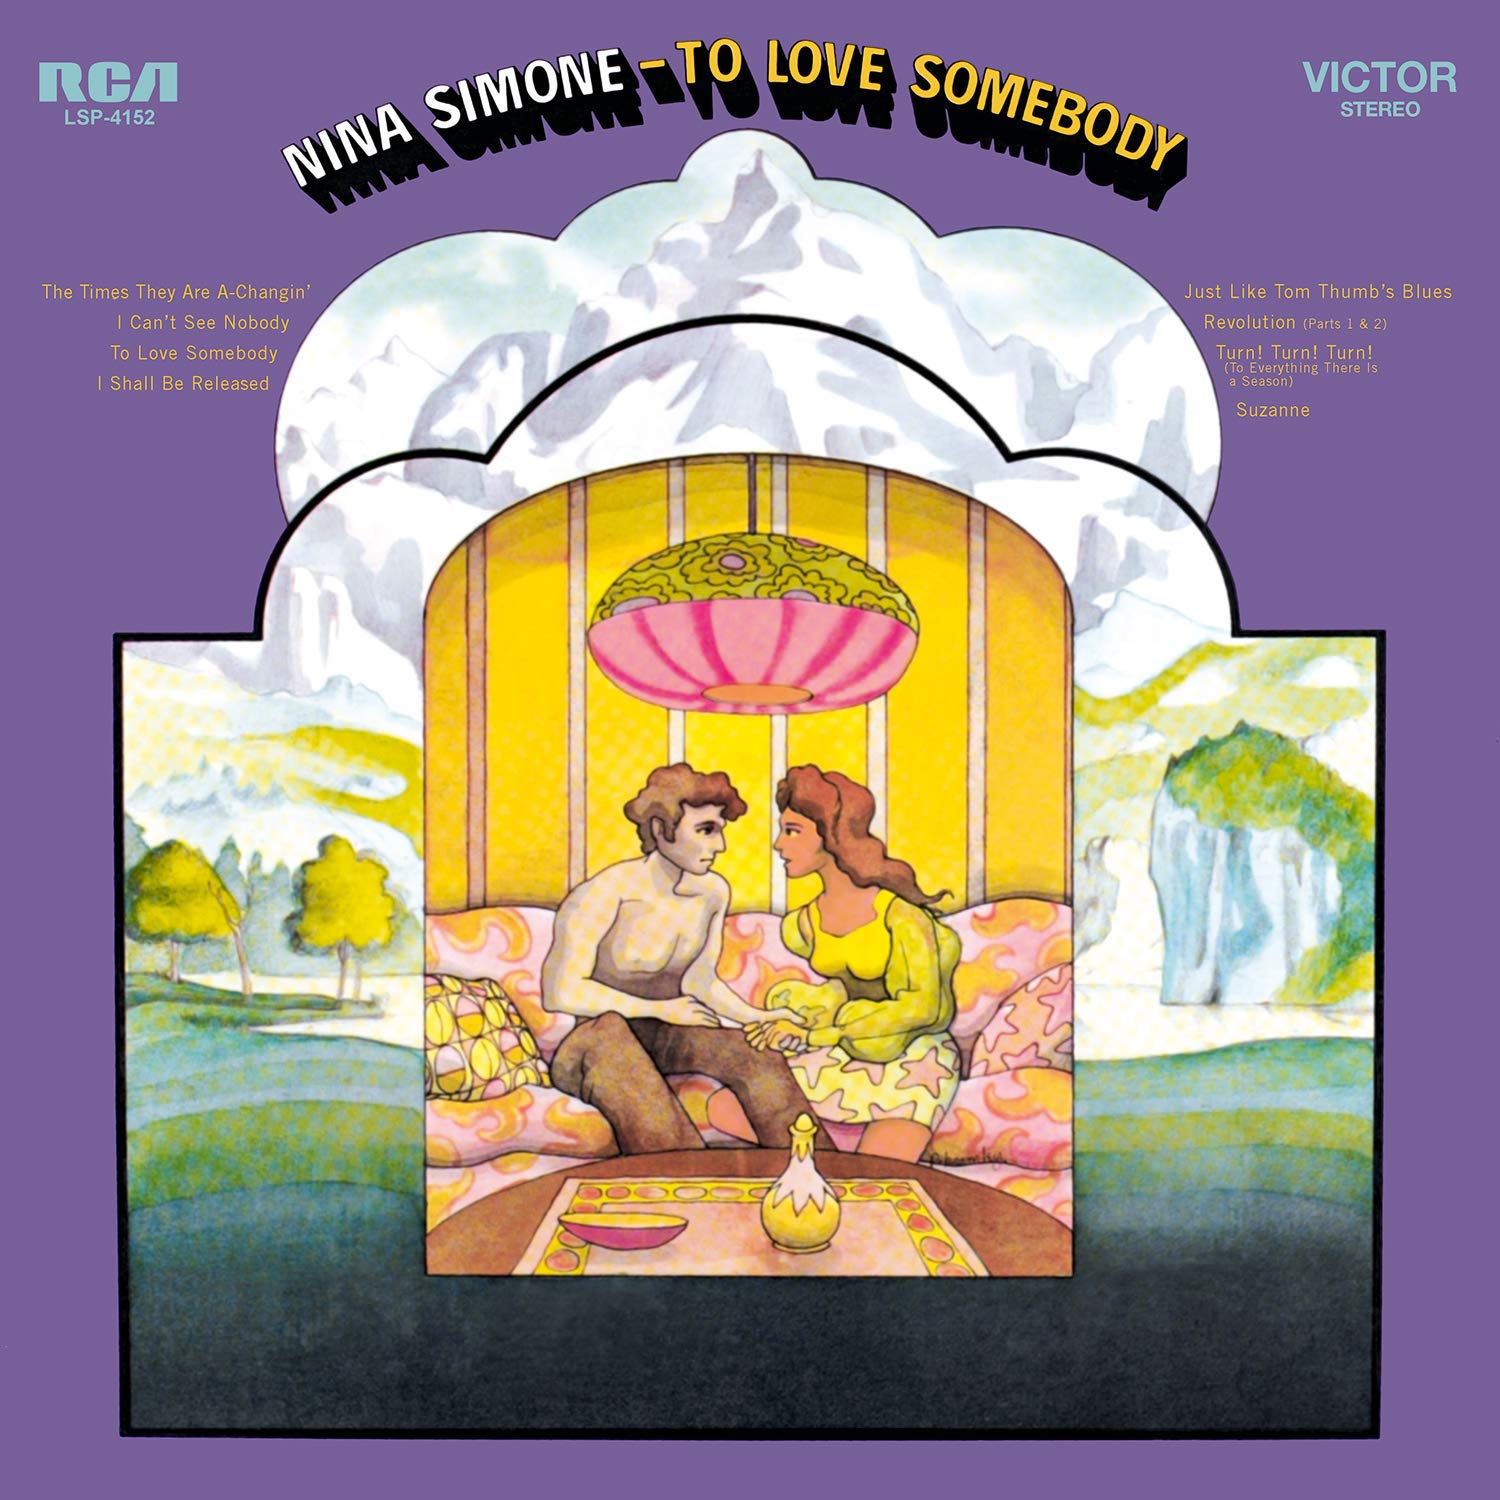 NINA SIMONE - TO LOVE SOMEBODY - 50TH ANNIVERSARY EDITION PURPLE & BLACK MARBLED VINYL LP - Wah Wah Records